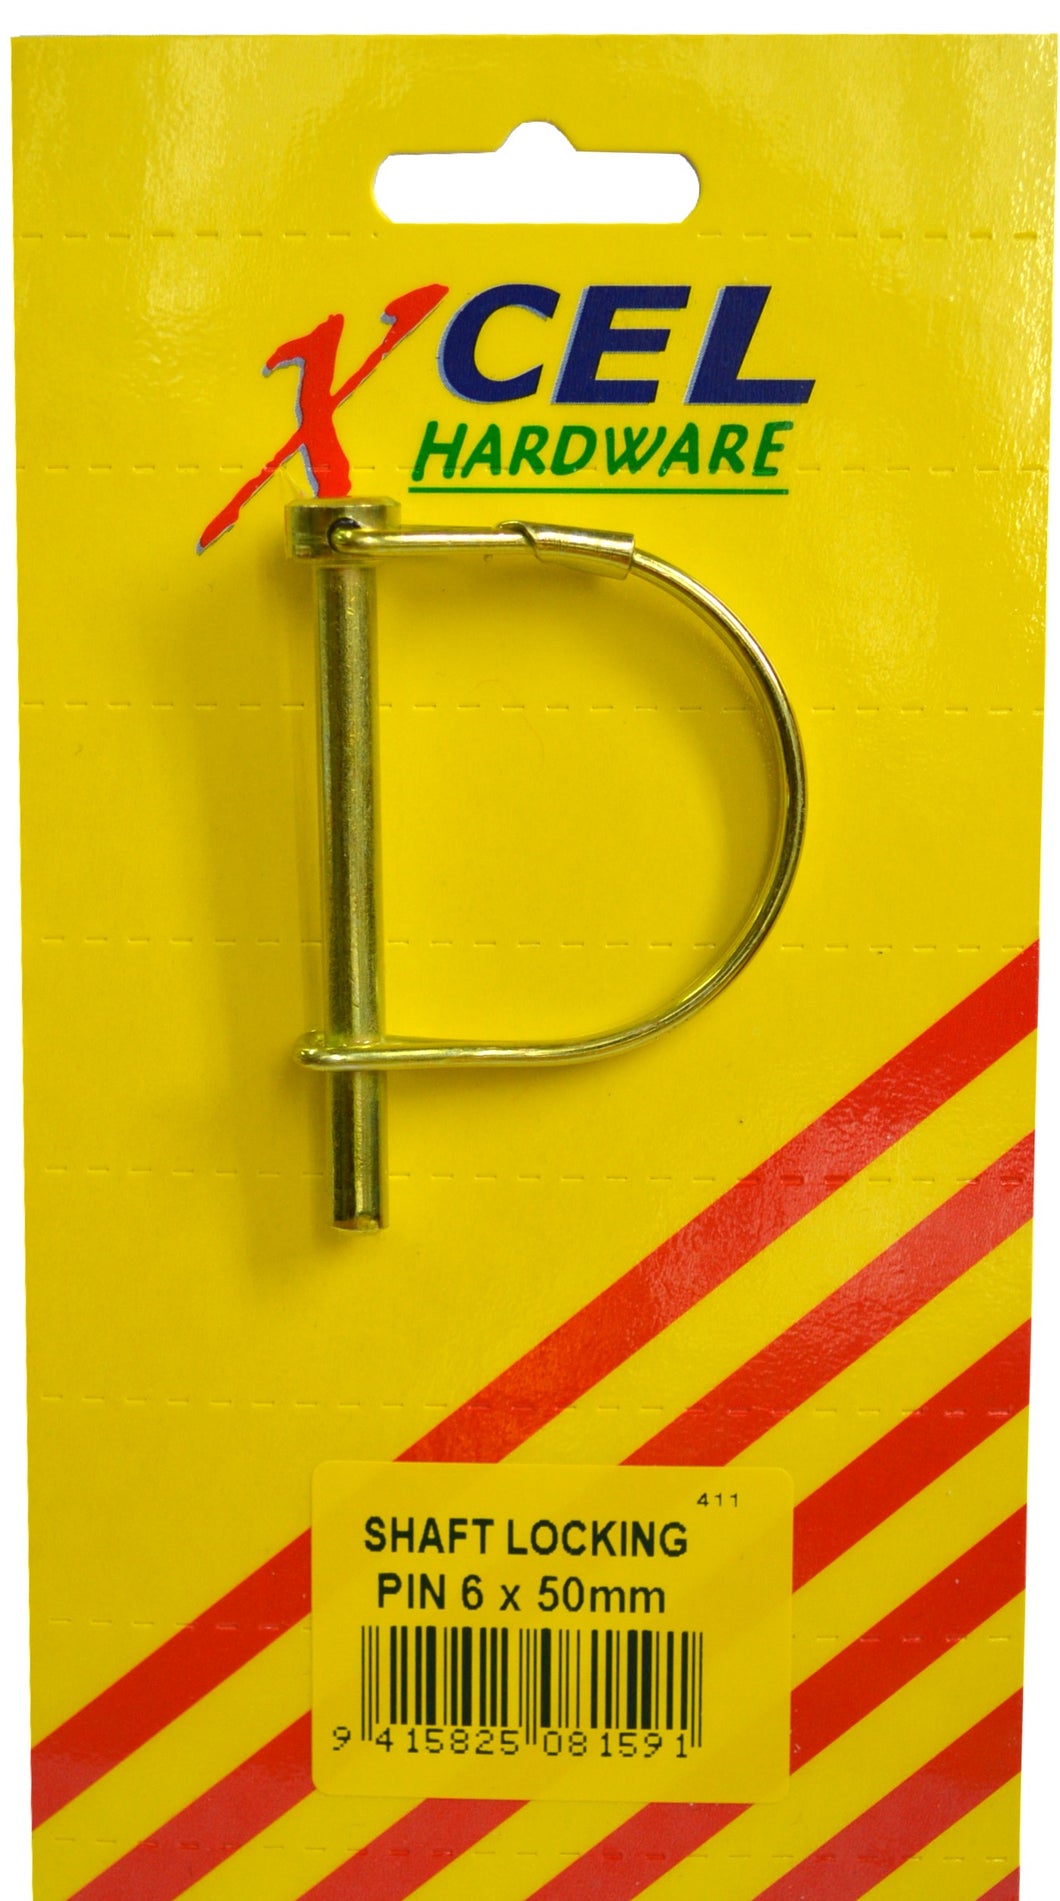 Shaft Locking Pin 6mm x 50mm Carded Xcel